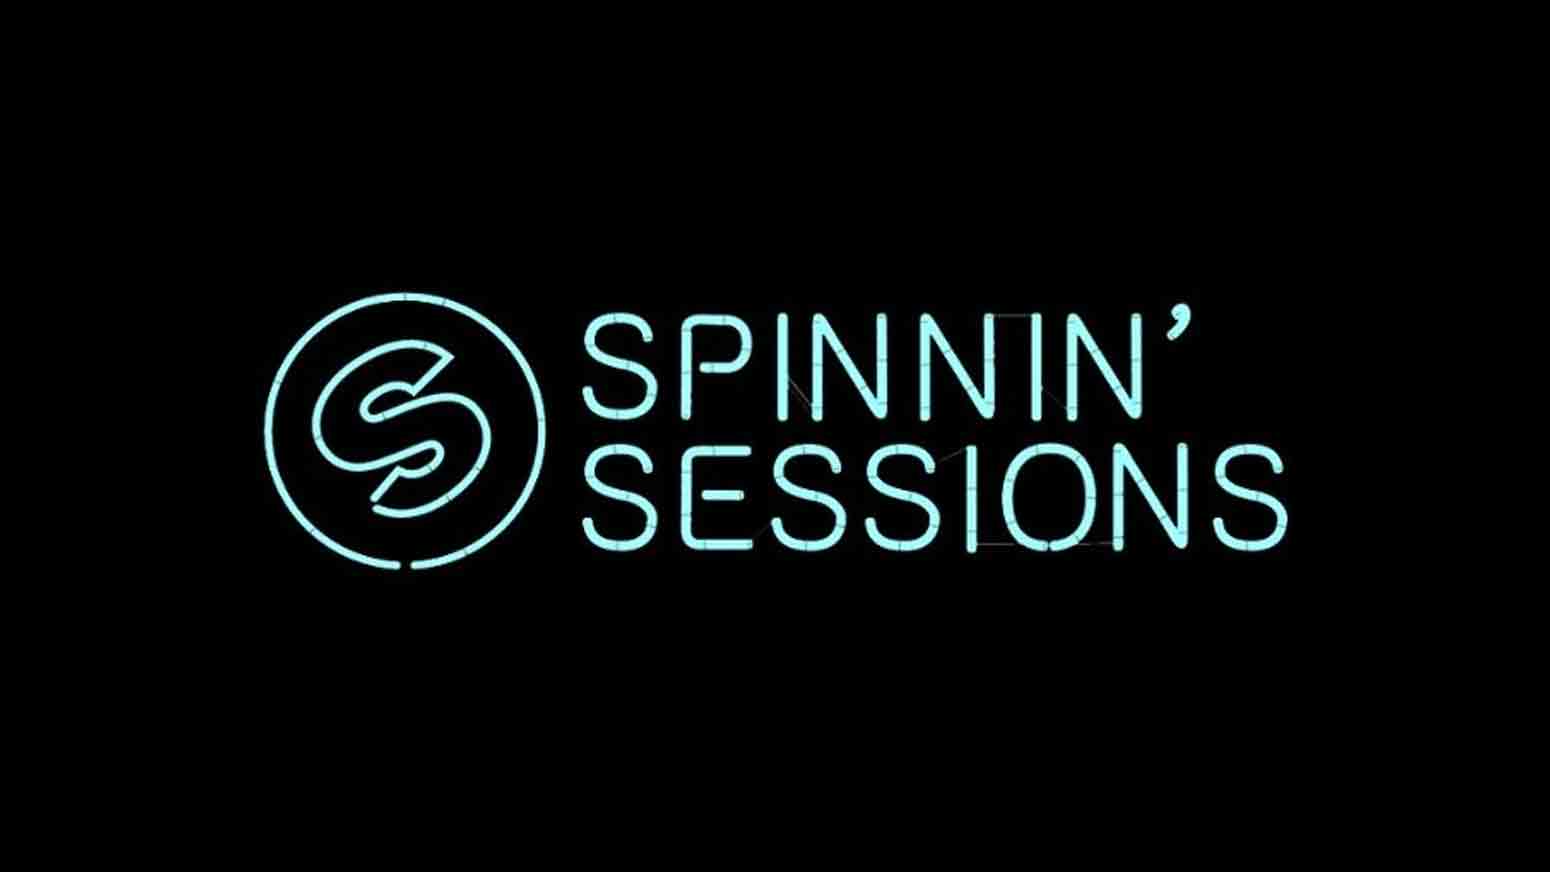 Spinnin’ Session